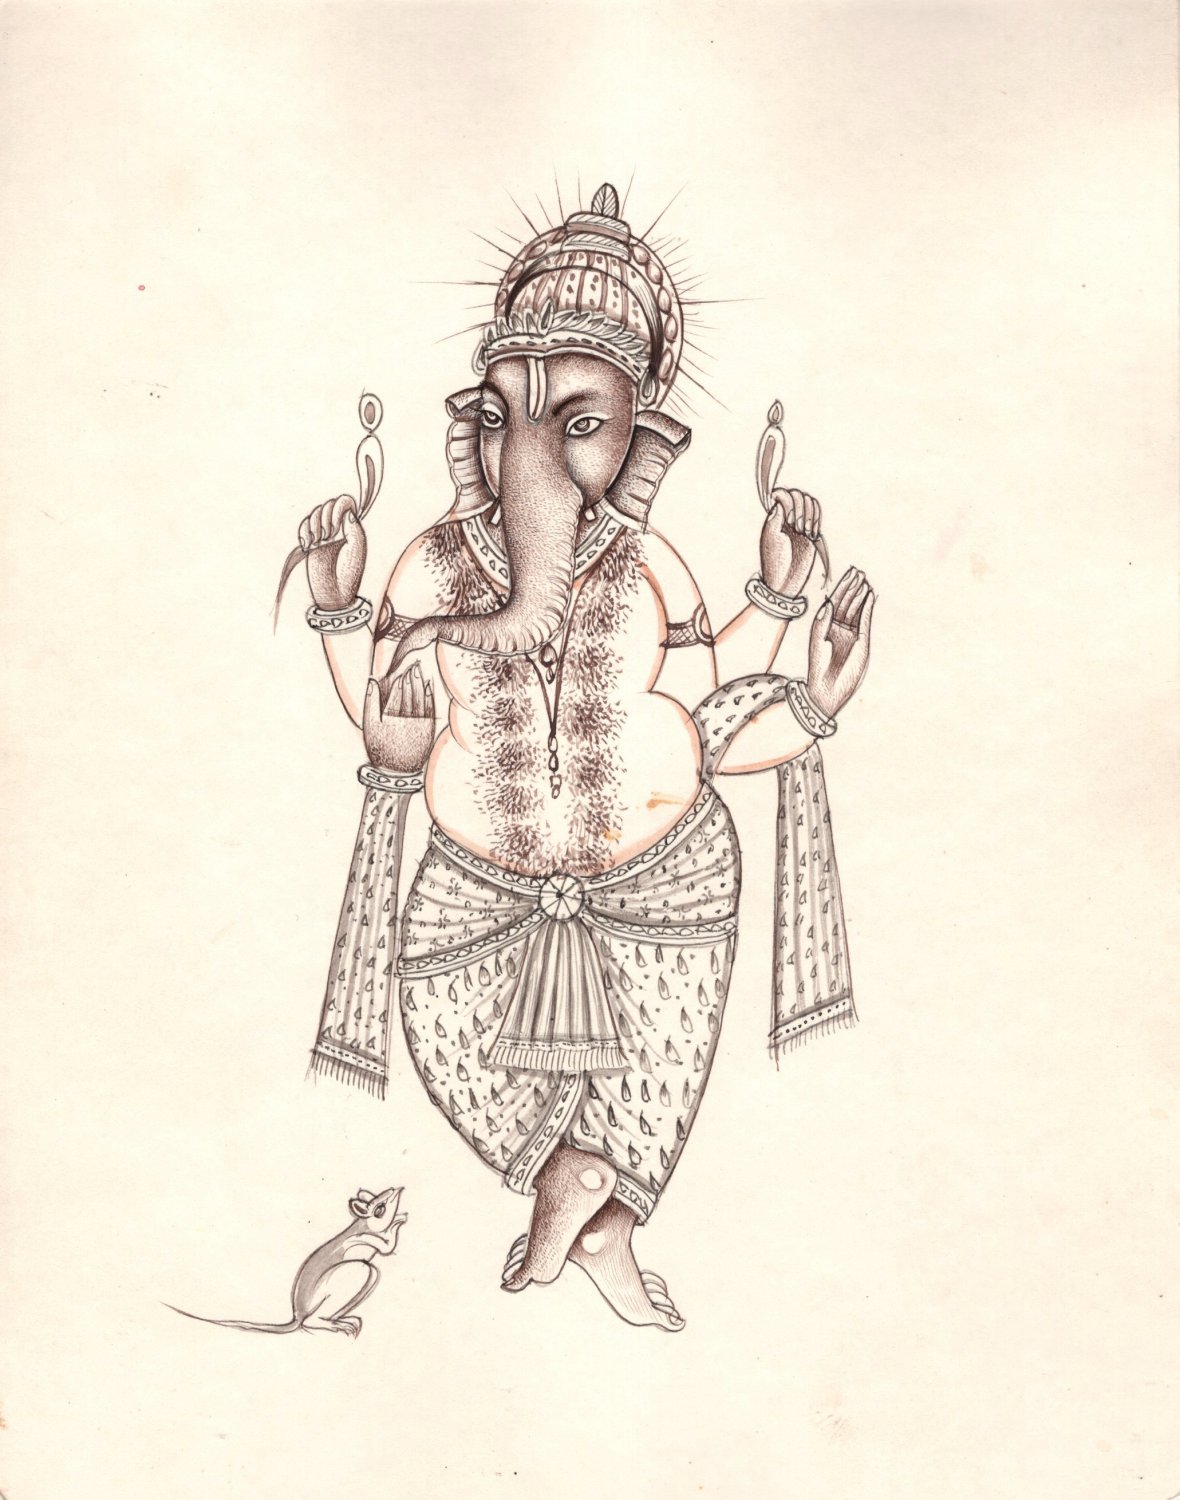 Ganesh Painting Handmade Indian Hindu Elephant God Lord Ganesha Miniature Art